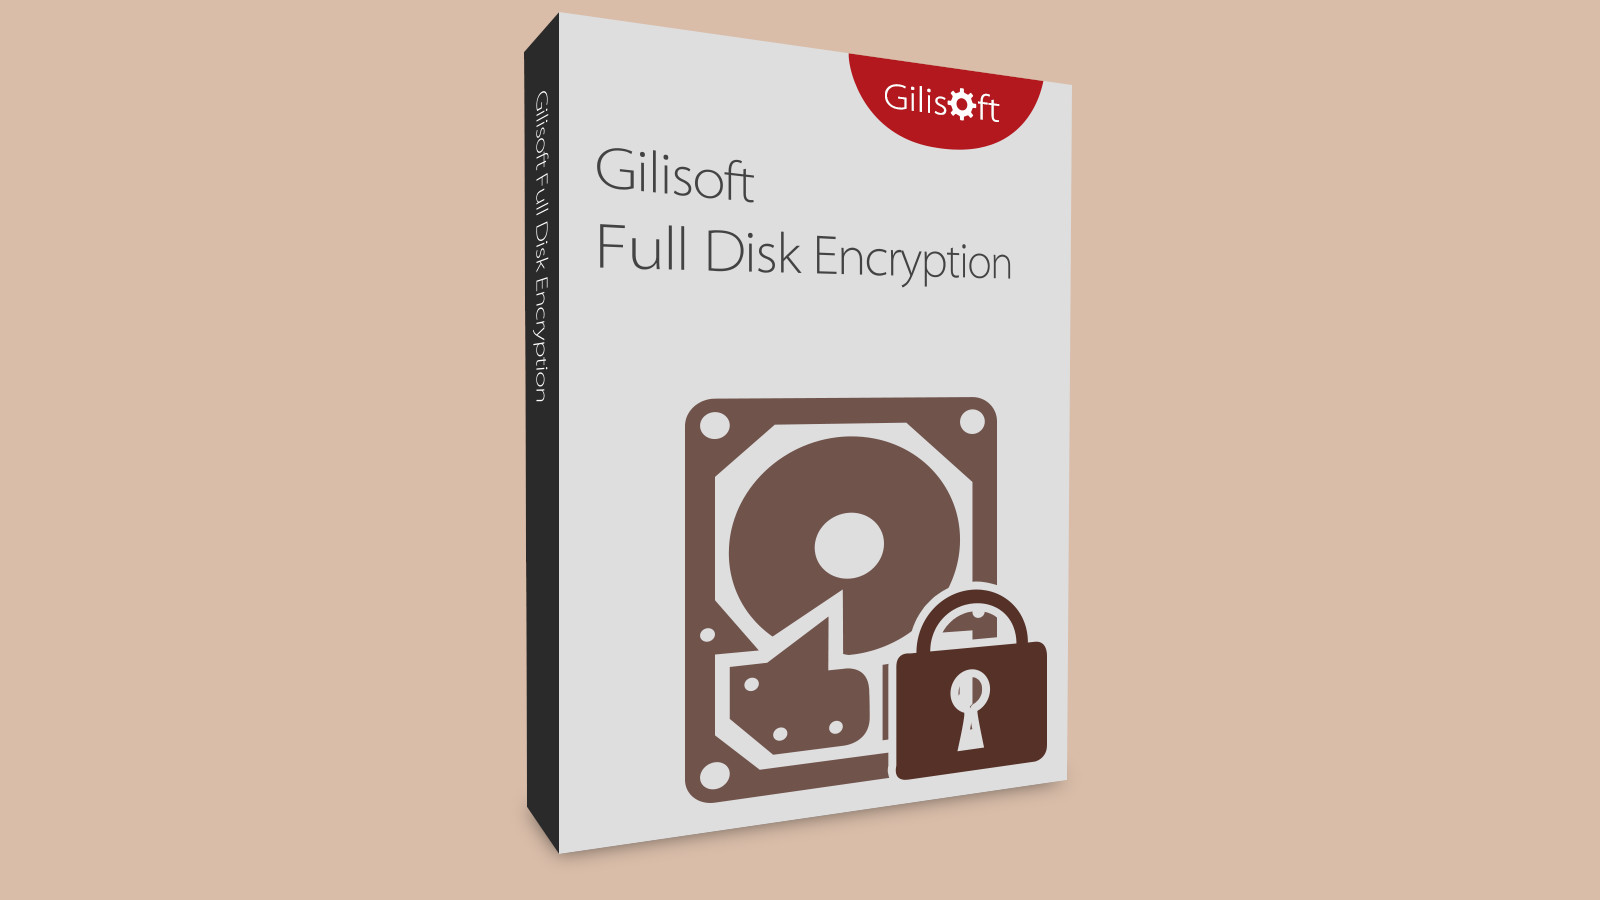 Gilisoft Full Disk Encryption CD Key 19.72 usd